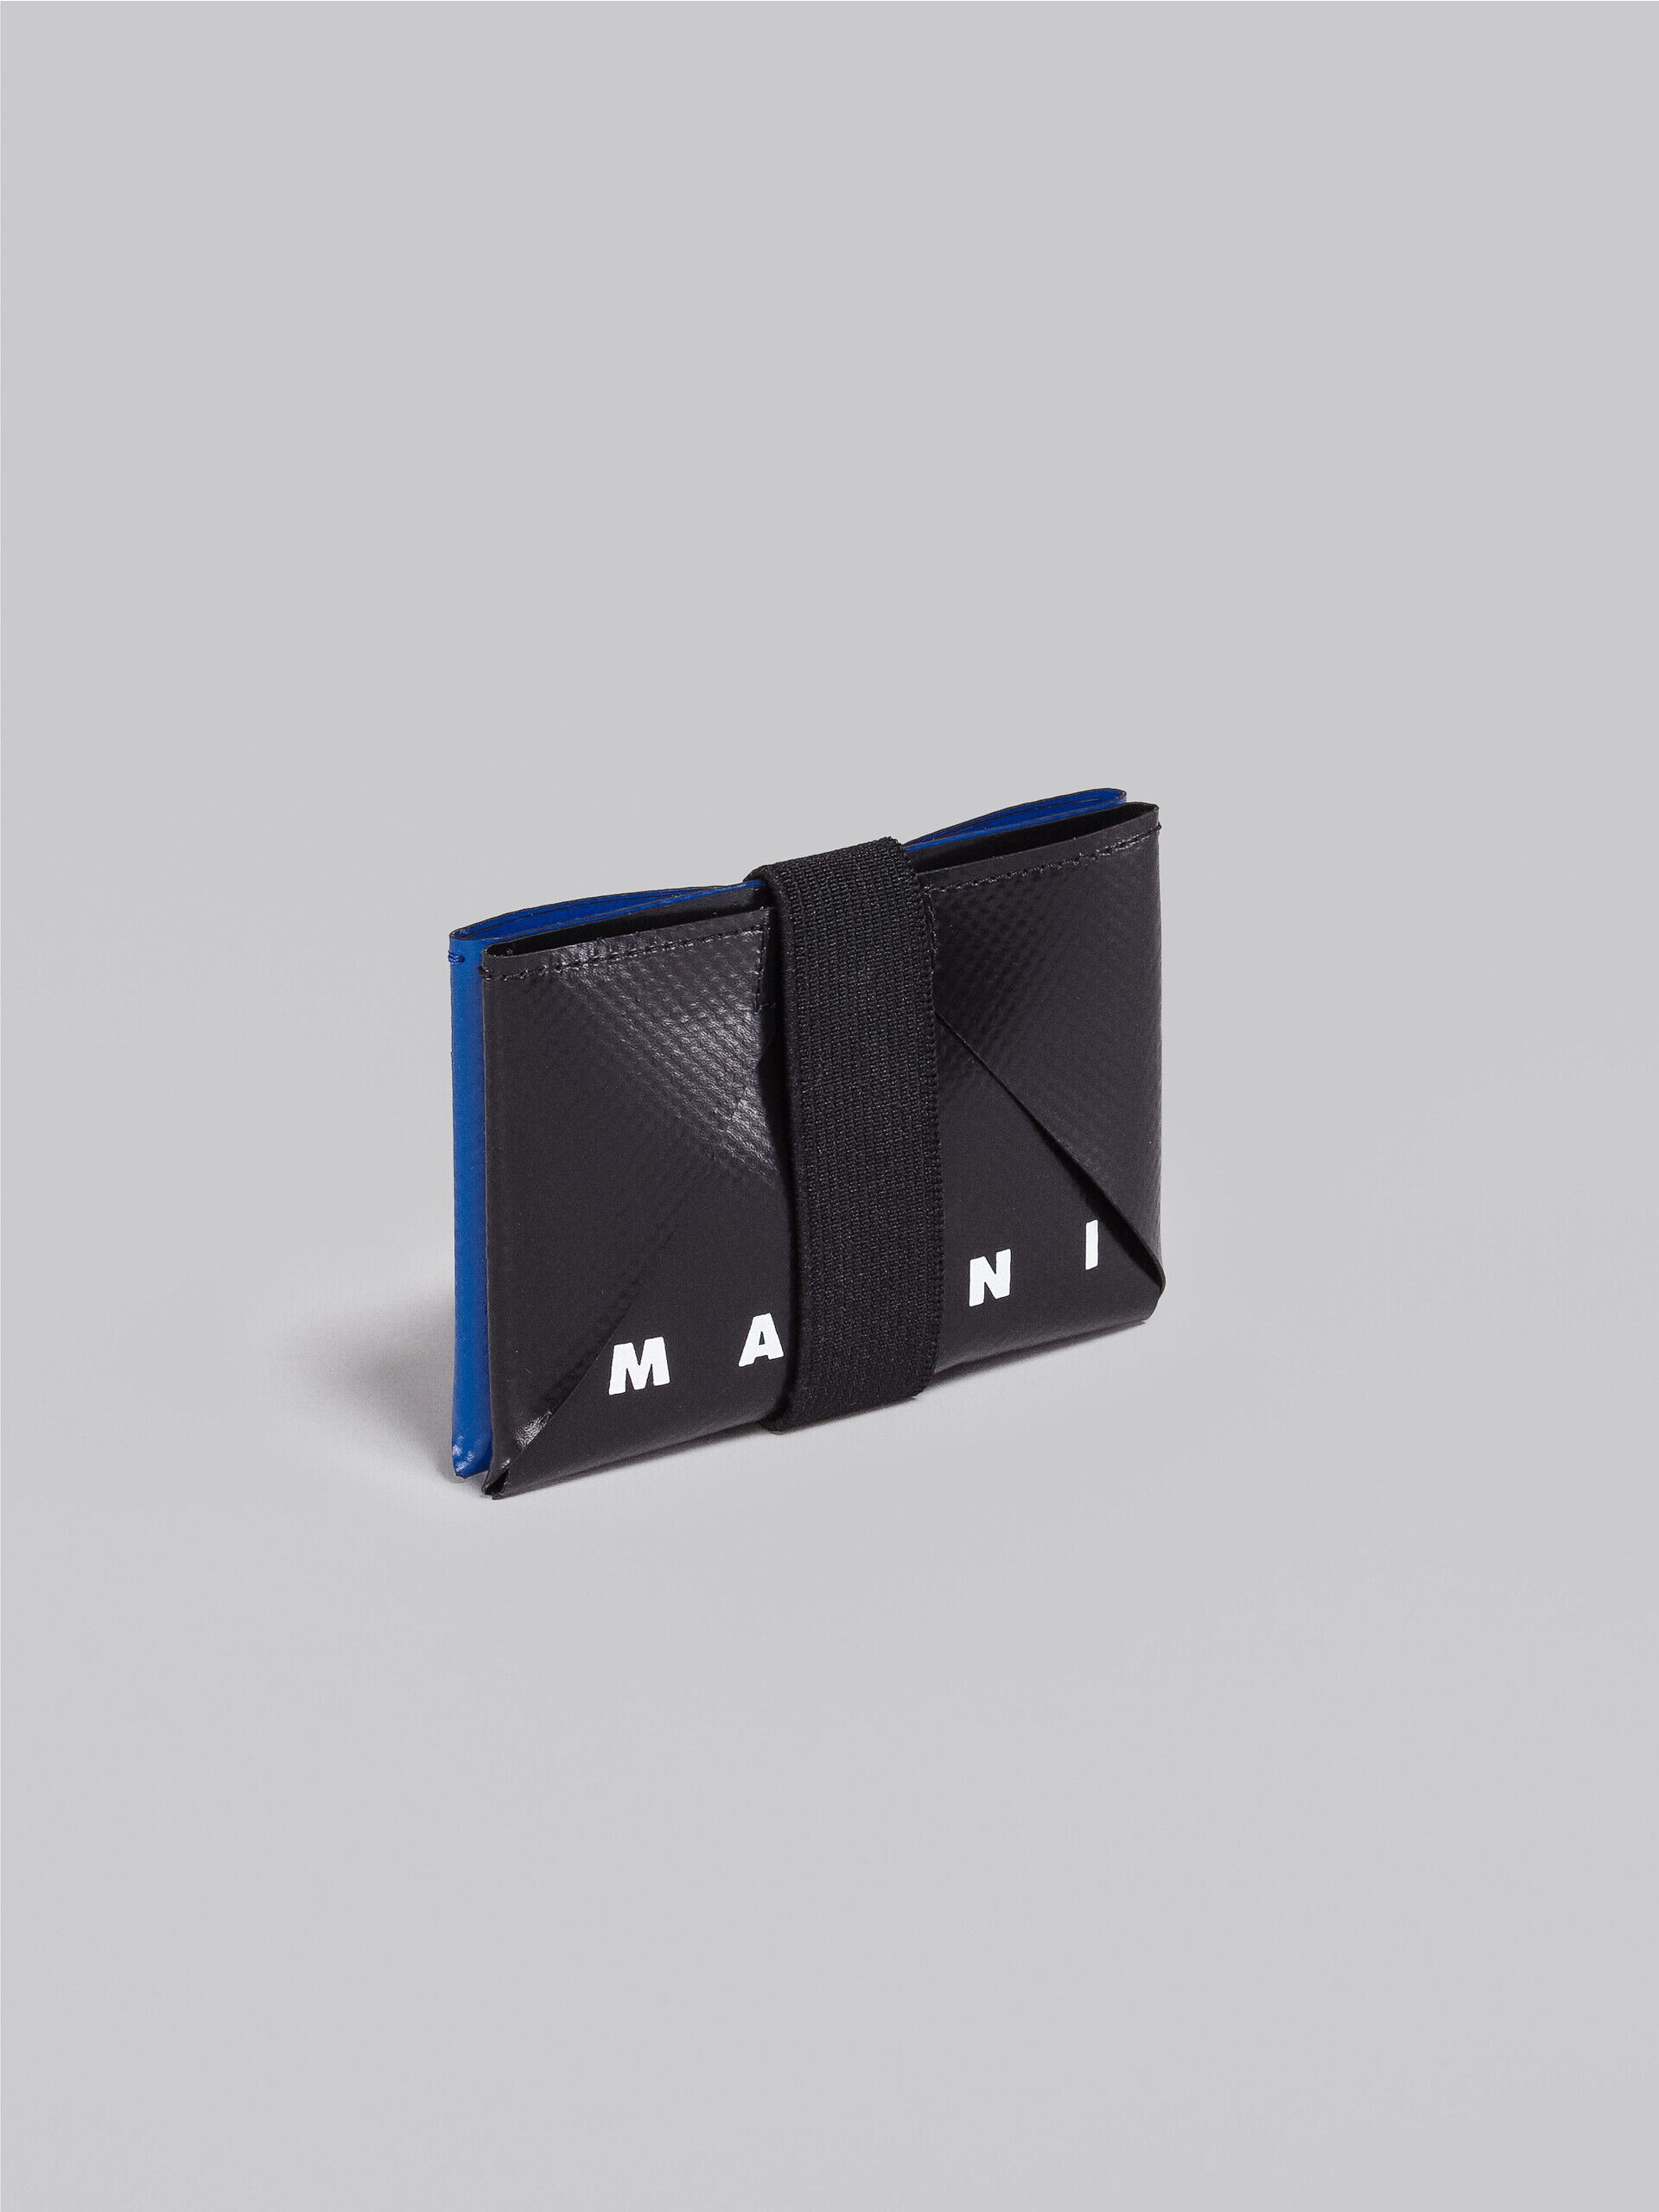 Black and blue card case | Marni